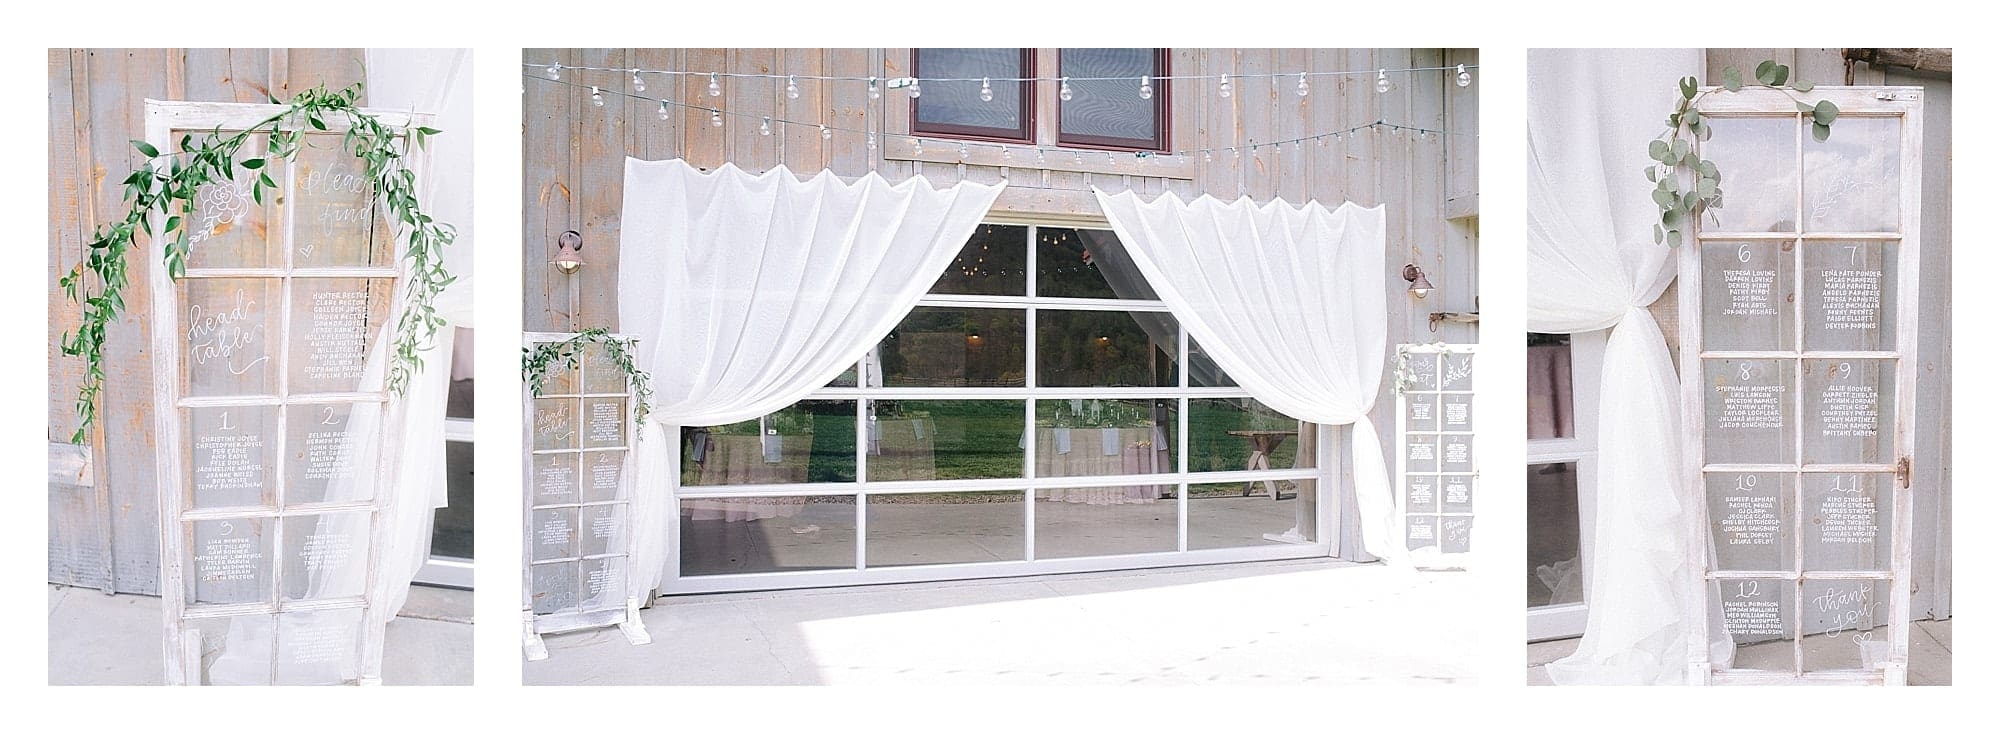 White wedding decor and hand calligraphy seating chart on window pane